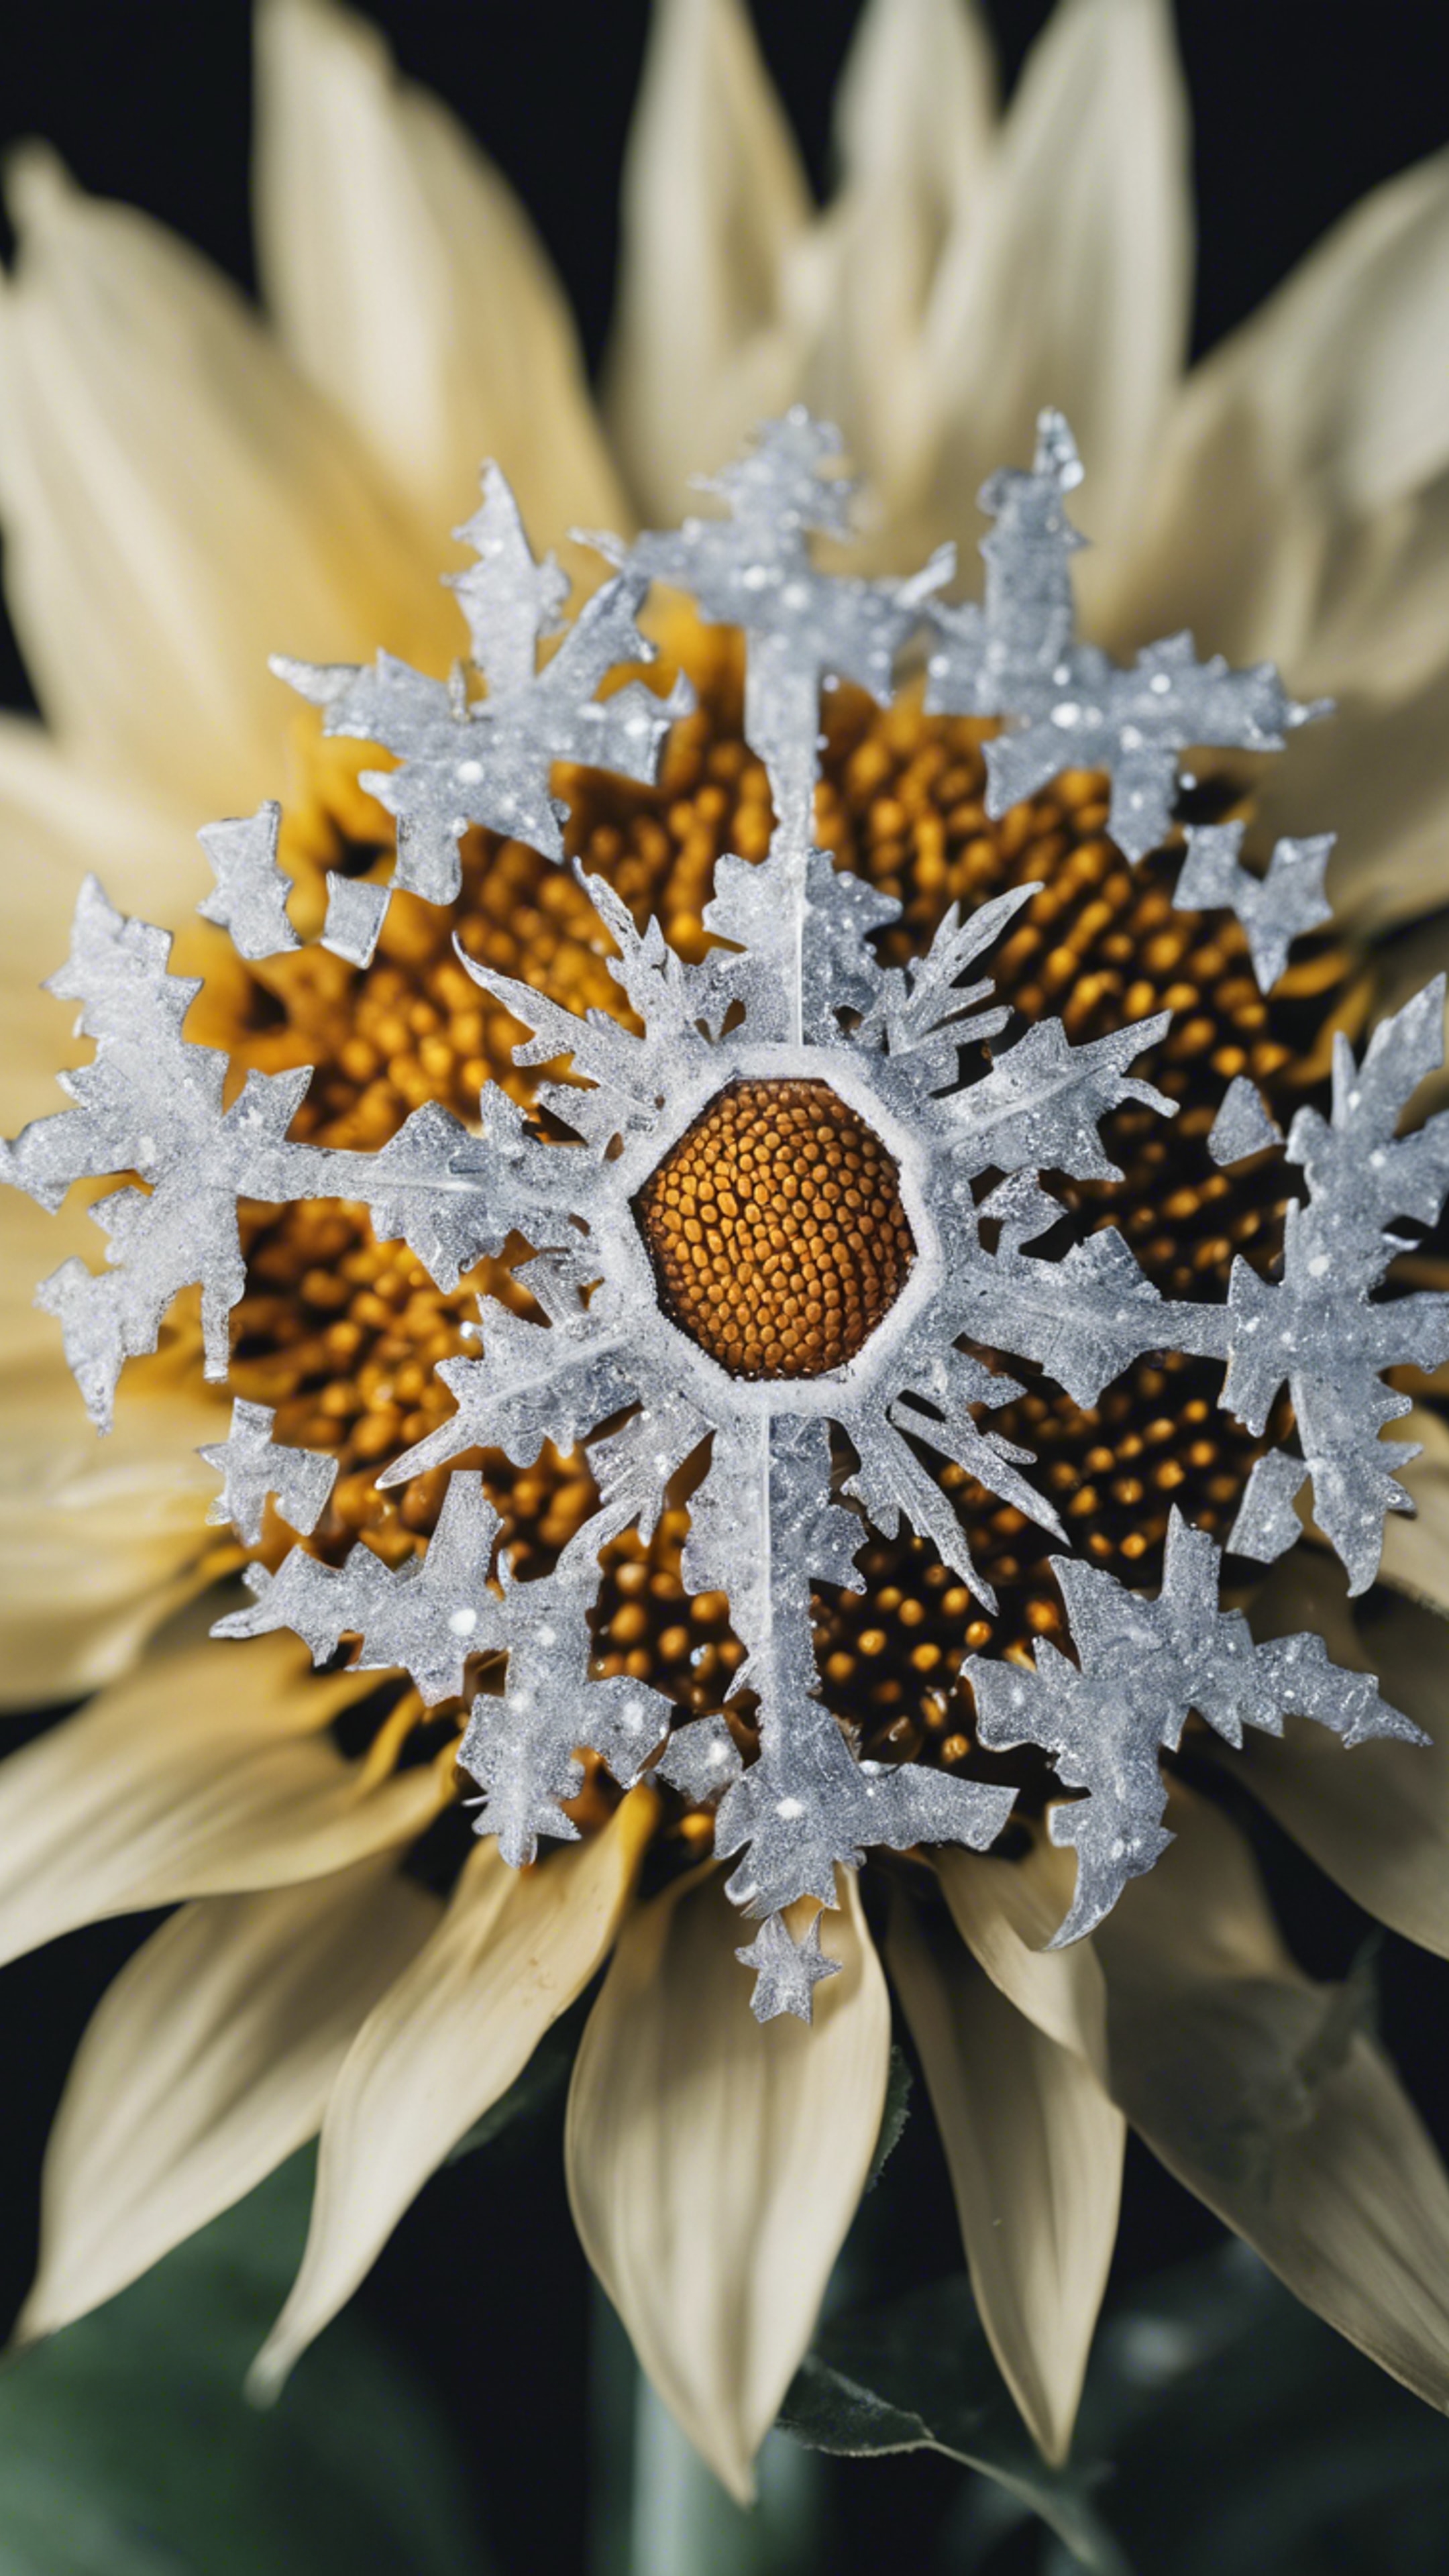 A beautiful snowflake on a sunflower. Wallpaper[bec770c36b254d6c9b40]